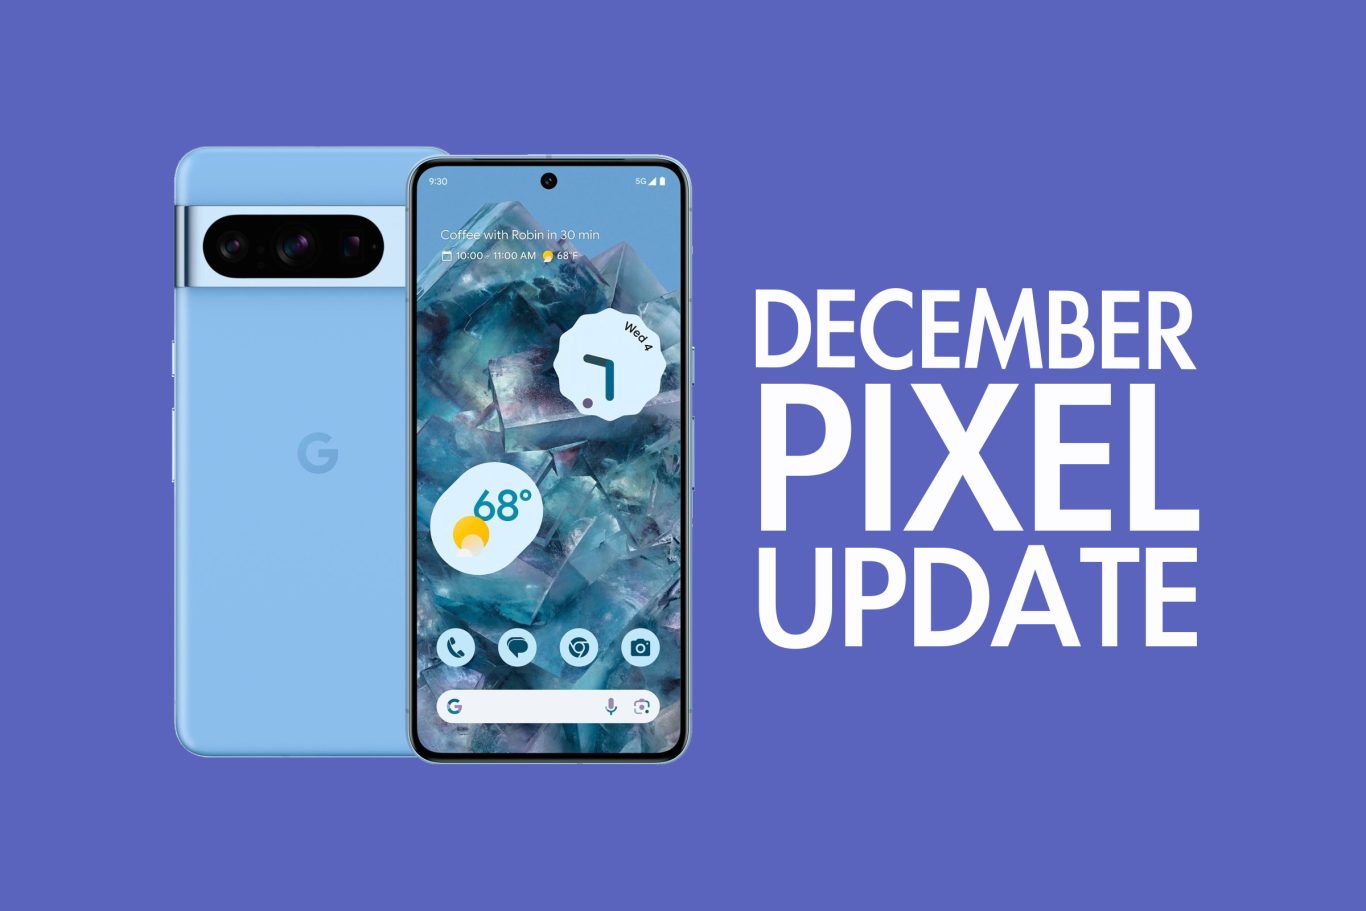 Your Google Pixel Phone's December Update Arrived